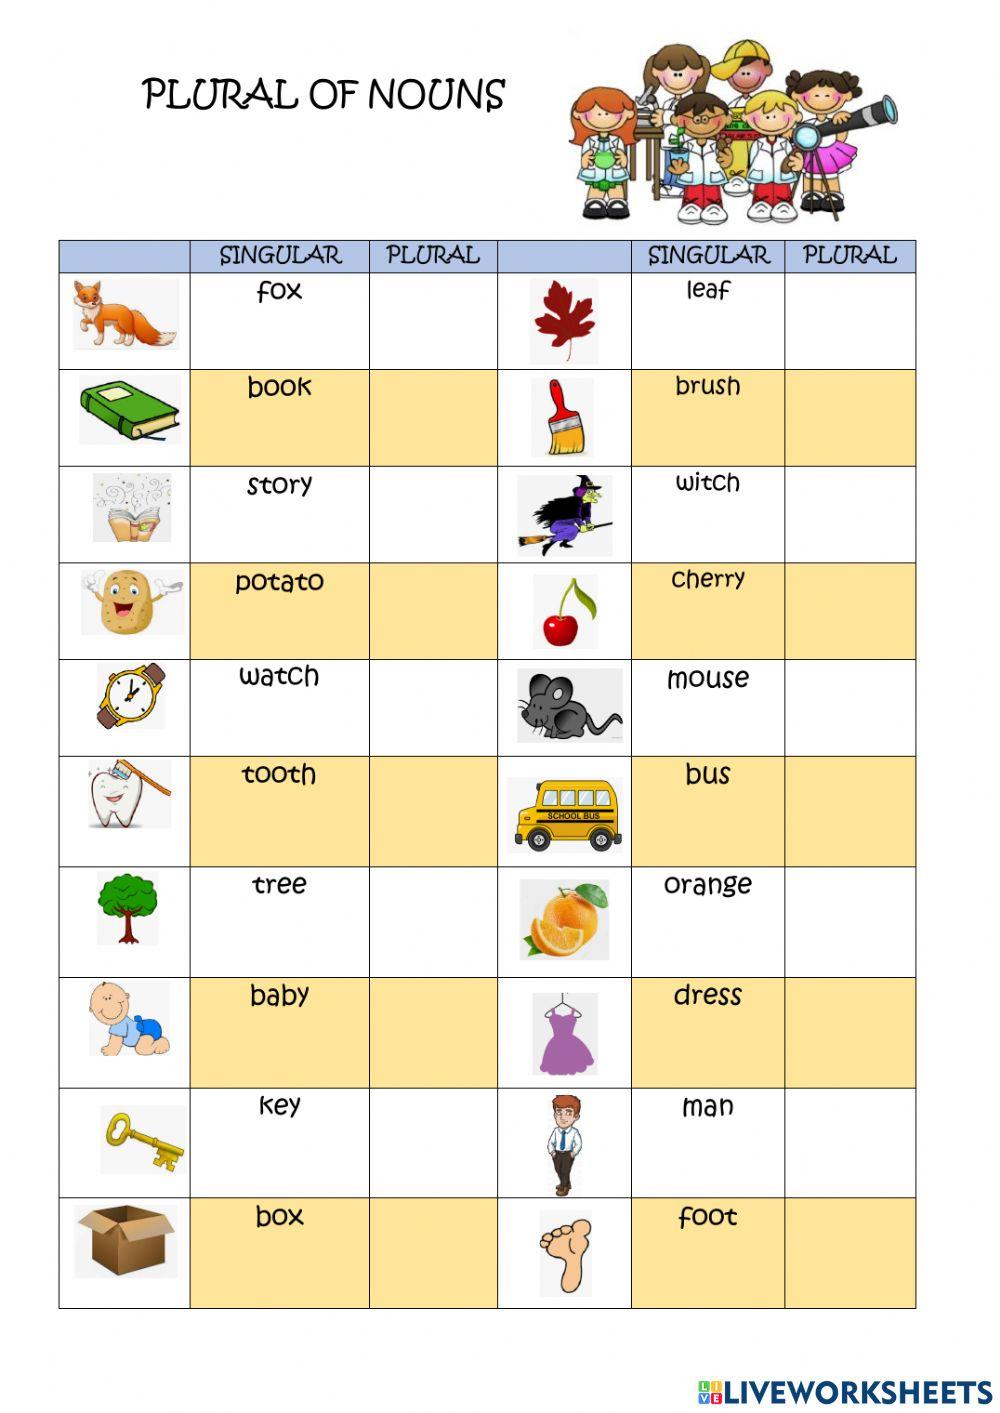 Plural of nouns online pdf exercise | Live Worksheets